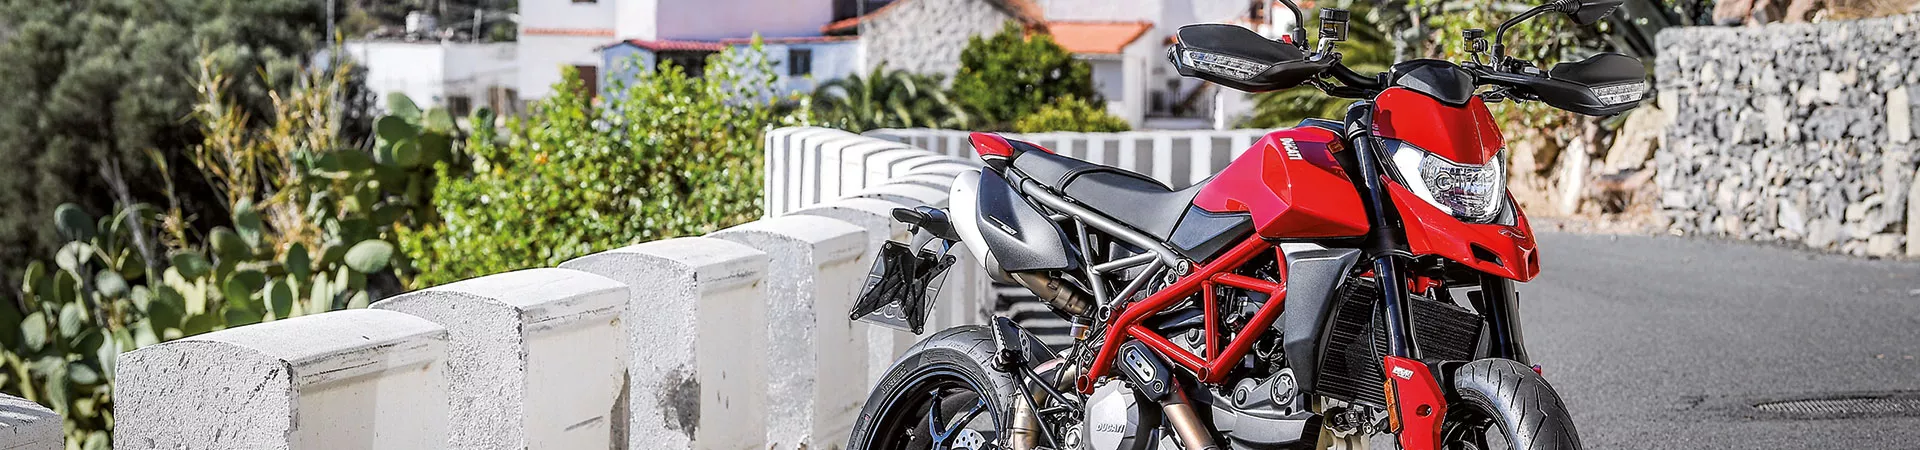 Titel-Ducati-Hypermotard-950-Modell-2019_26-04-2019_a734e